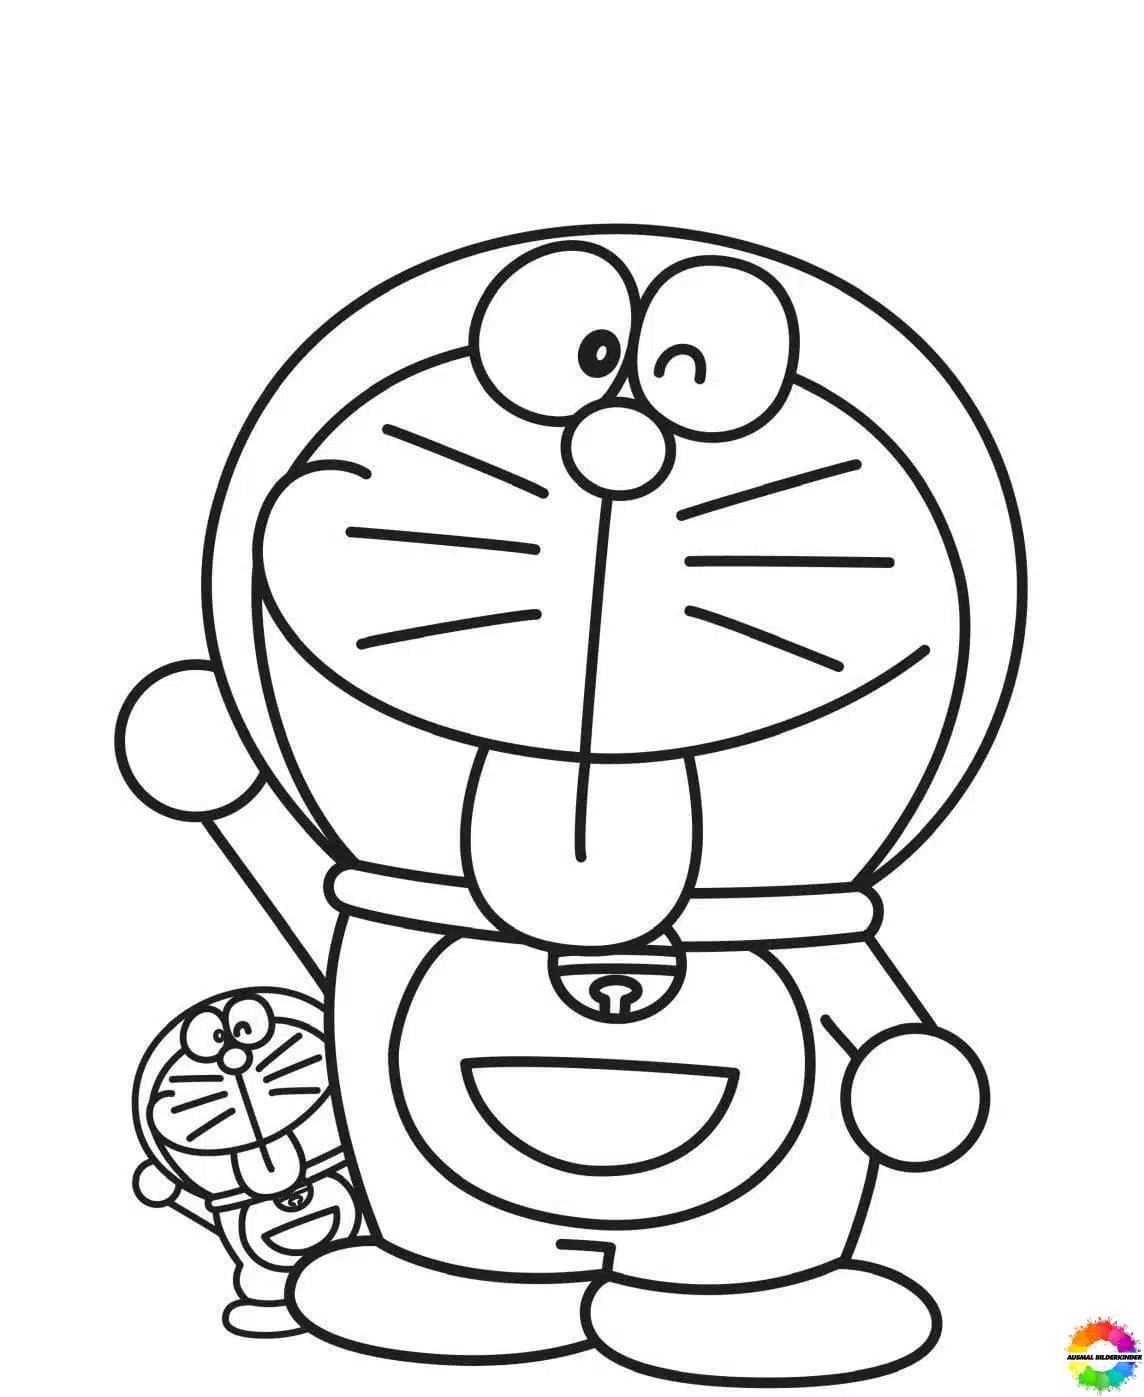 Doraemon 11